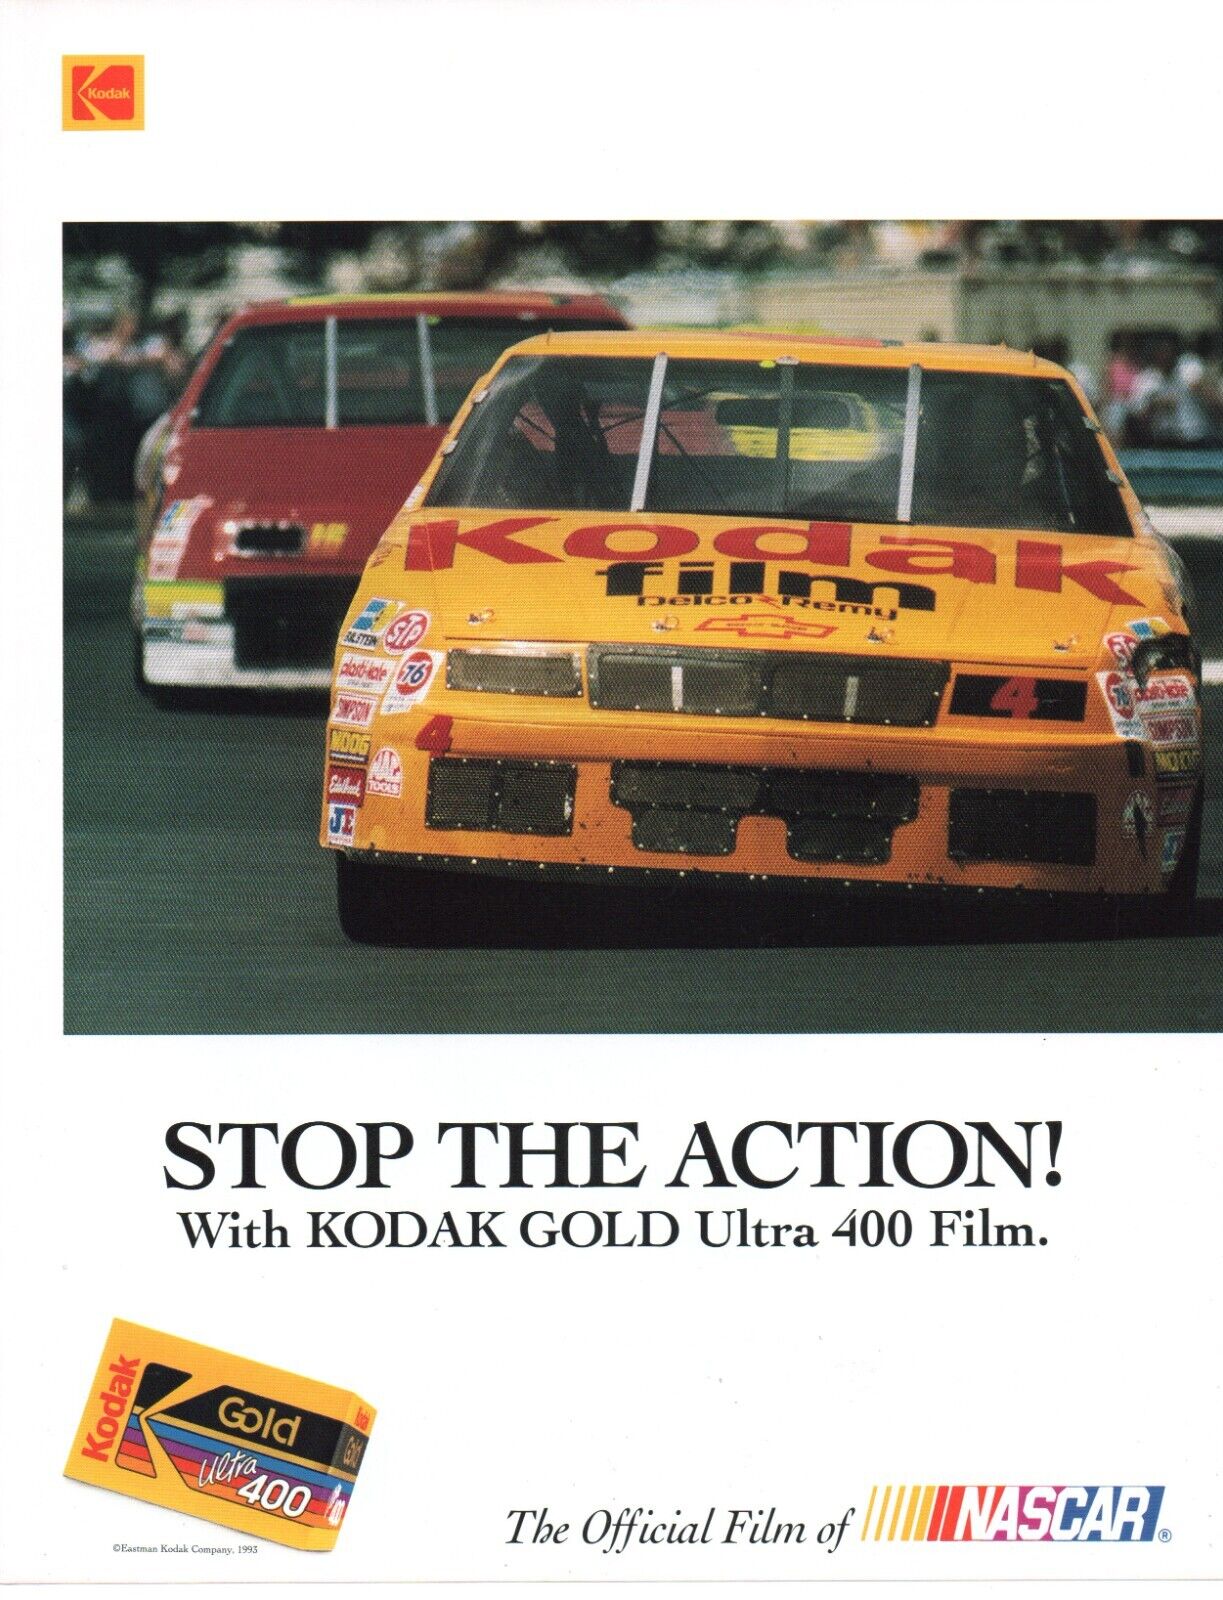 1993 KODAK GOLD Ultra 400 Film Nascar Racing PRINT AD WALL ART - STOP THE ACTION